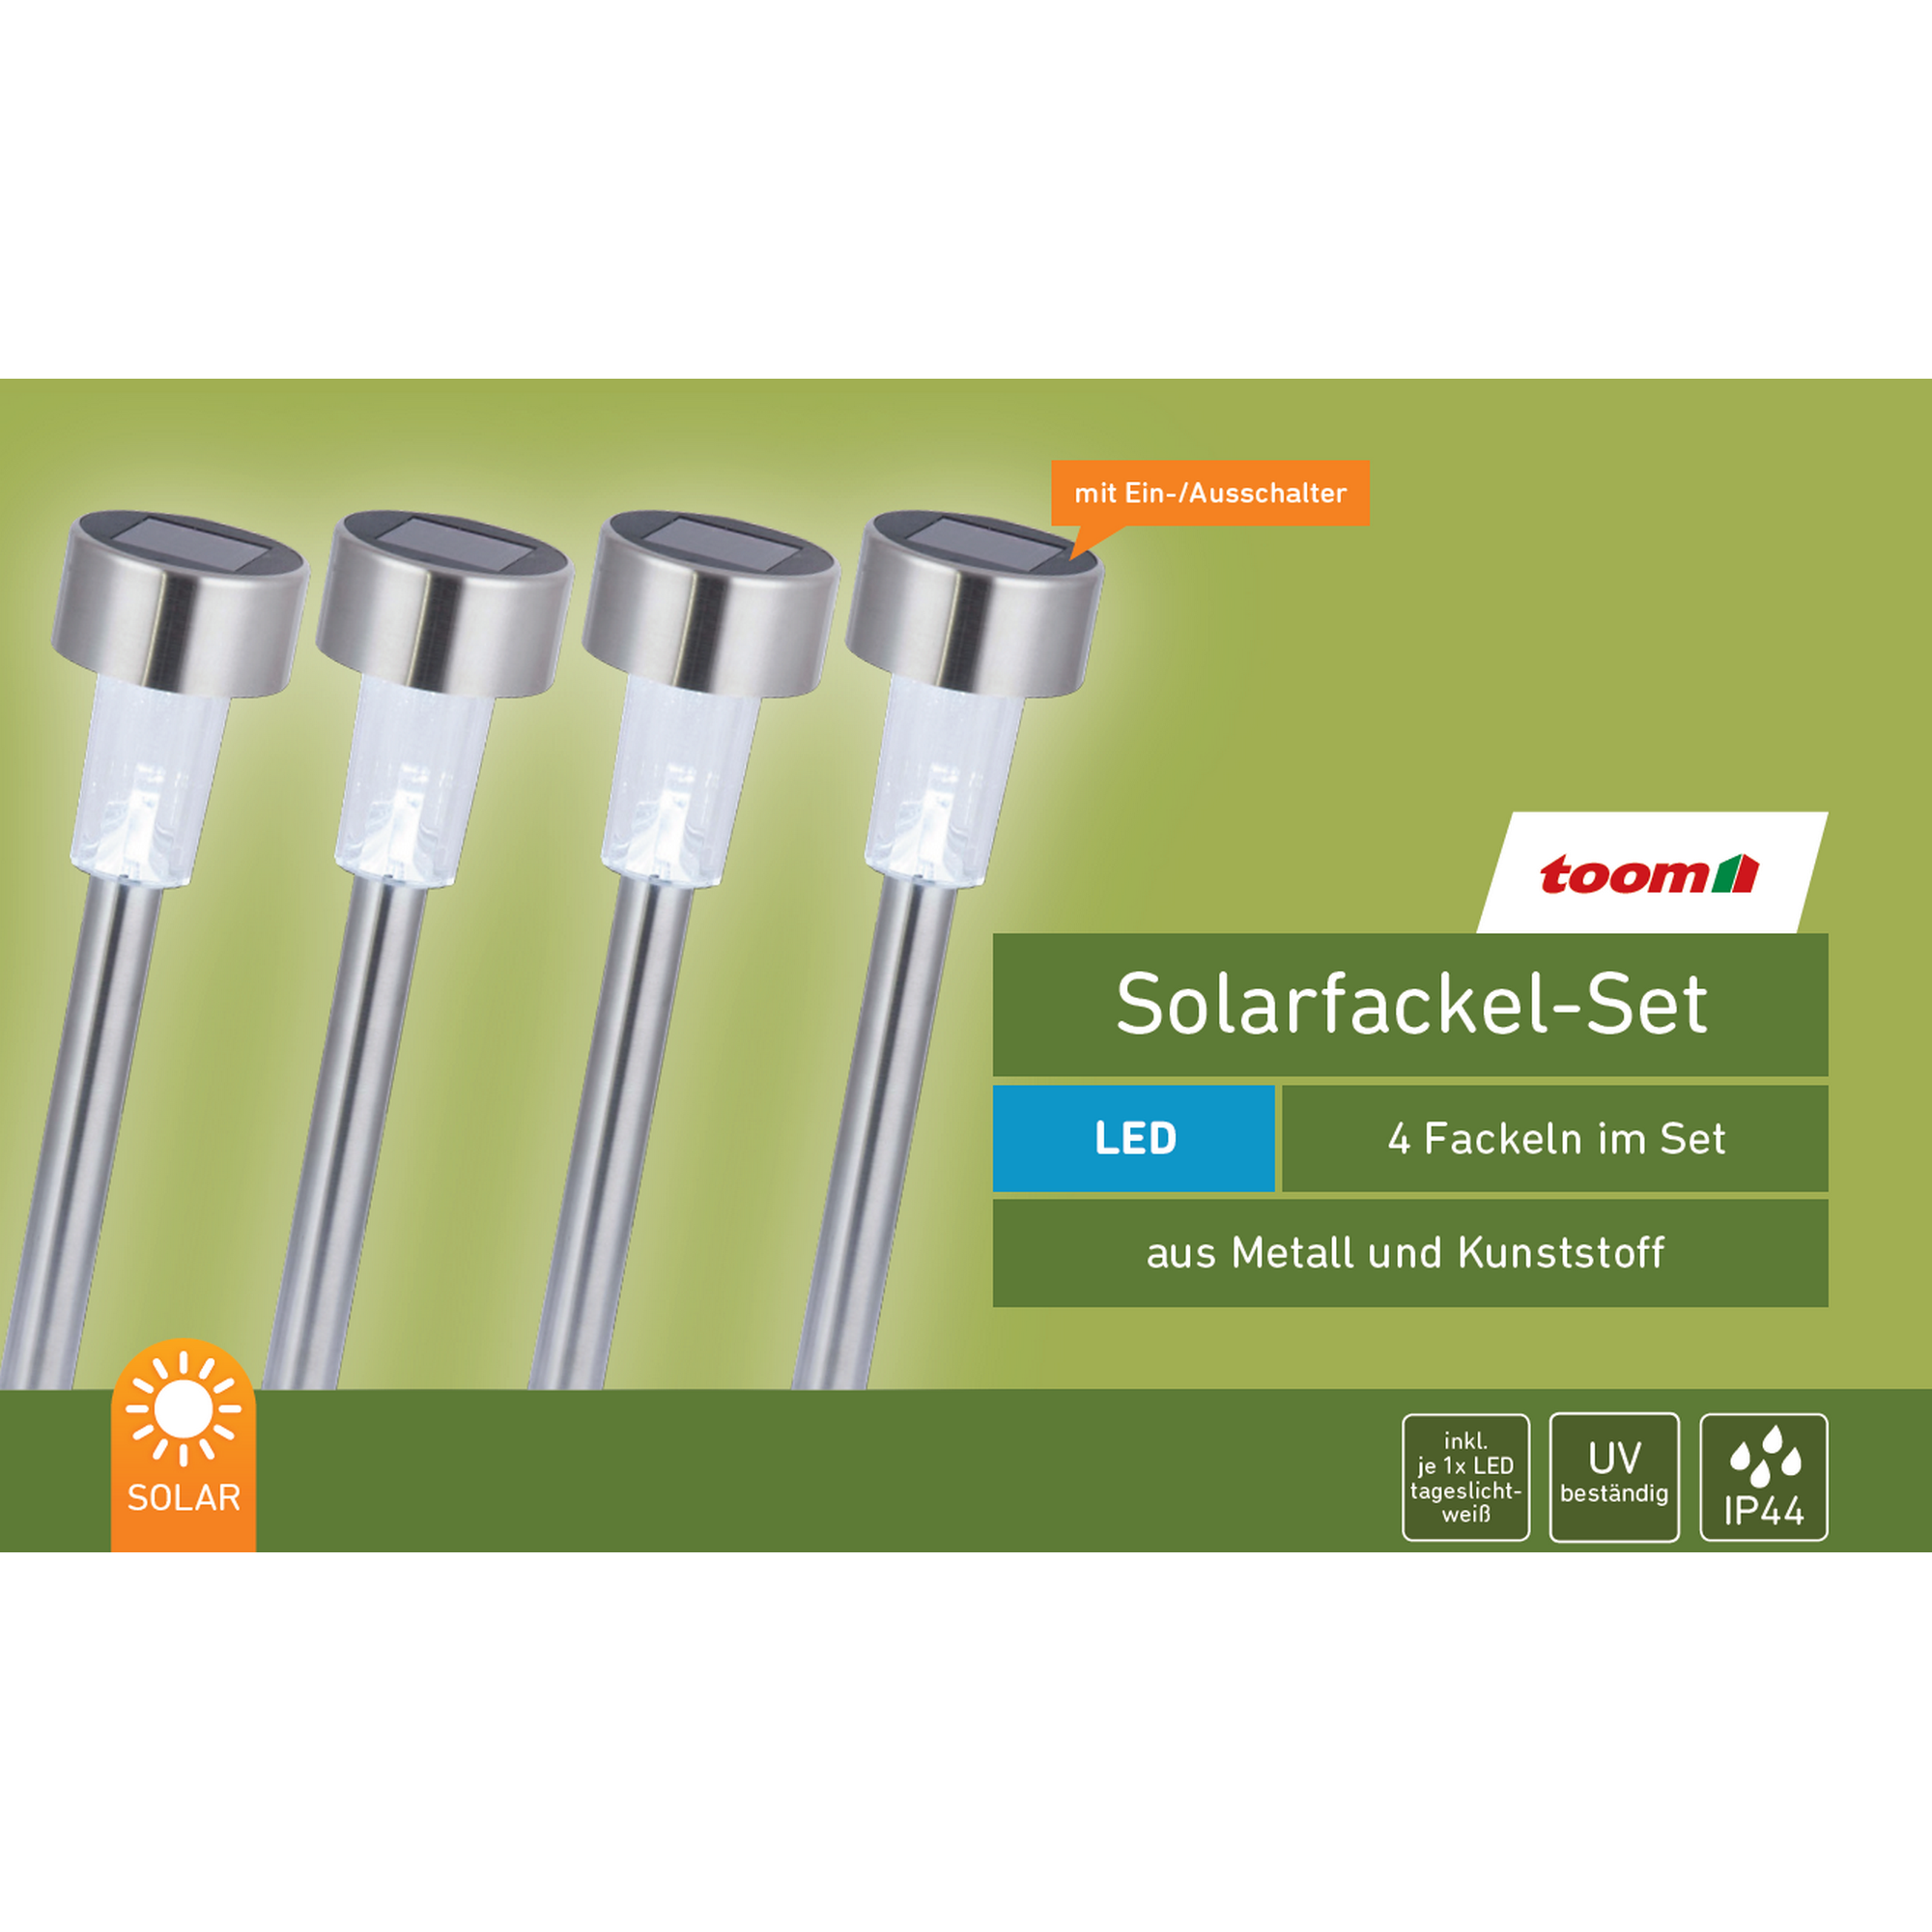 LED-Solarfackel-Set silbern 30 cm, 4 Stück + product picture